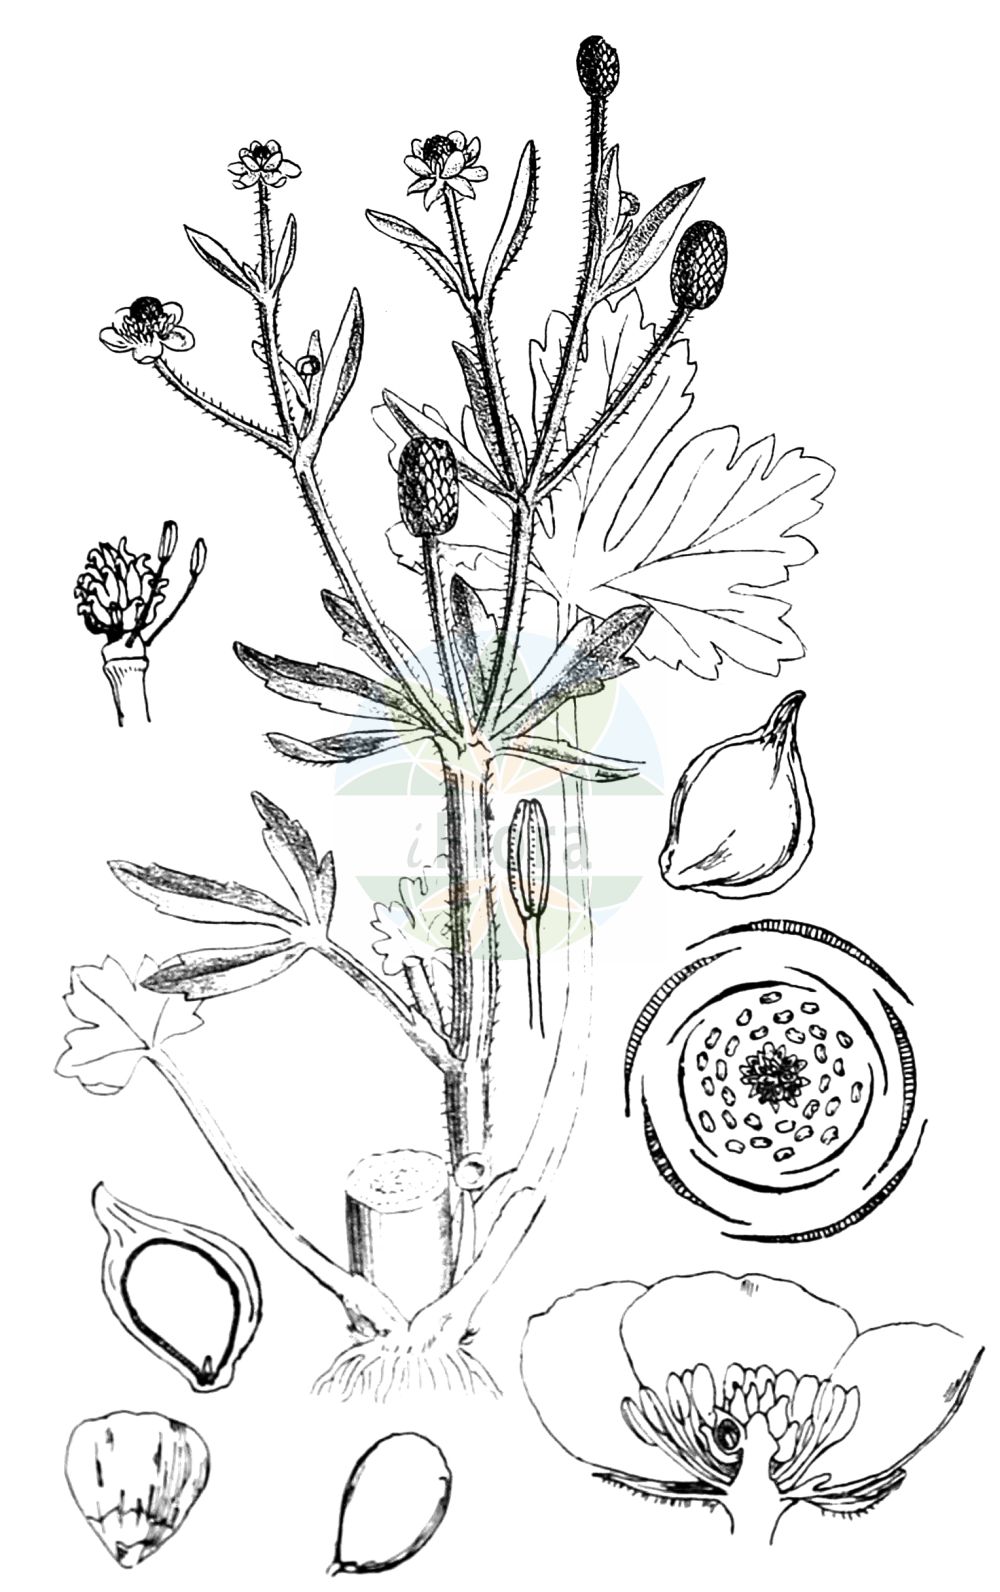 Historische Abbildung von Ranunculus sceleratus (Gift-Hahnenfuß - Celery-leaved Buttercup). Das Bild zeigt Blatt, Bluete, Frucht und Same. ---- Historical Drawing of Ranunculus sceleratus (Gift-Hahnenfuß - Celery-leaved Buttercup). The image is showing leaf, flower, fruit and seed.(Ranunculus sceleratus,Gift-Hahnenfuß,Celery-leaved Buttercup,Ranunculus dolosus,Ranunculus sceleratus,Gift-Hahnenfuss,Gefaehrlicher Hahnenfuss,Celery-leaved Buttercup,Blisterwort,Celery-leaf Buttercup,Crowfoot Buttercup,Cursed Buttercup,Marsh Crowfoot,Ranunculus,Hahnenfuß,Buttercup,Ranunculaceae,Hahnenfußgewächse,Buttercup family,Blatt,Bluete,Frucht,Same,leaf,flower,fruit,seed,Kirtikar & Basu (1918))